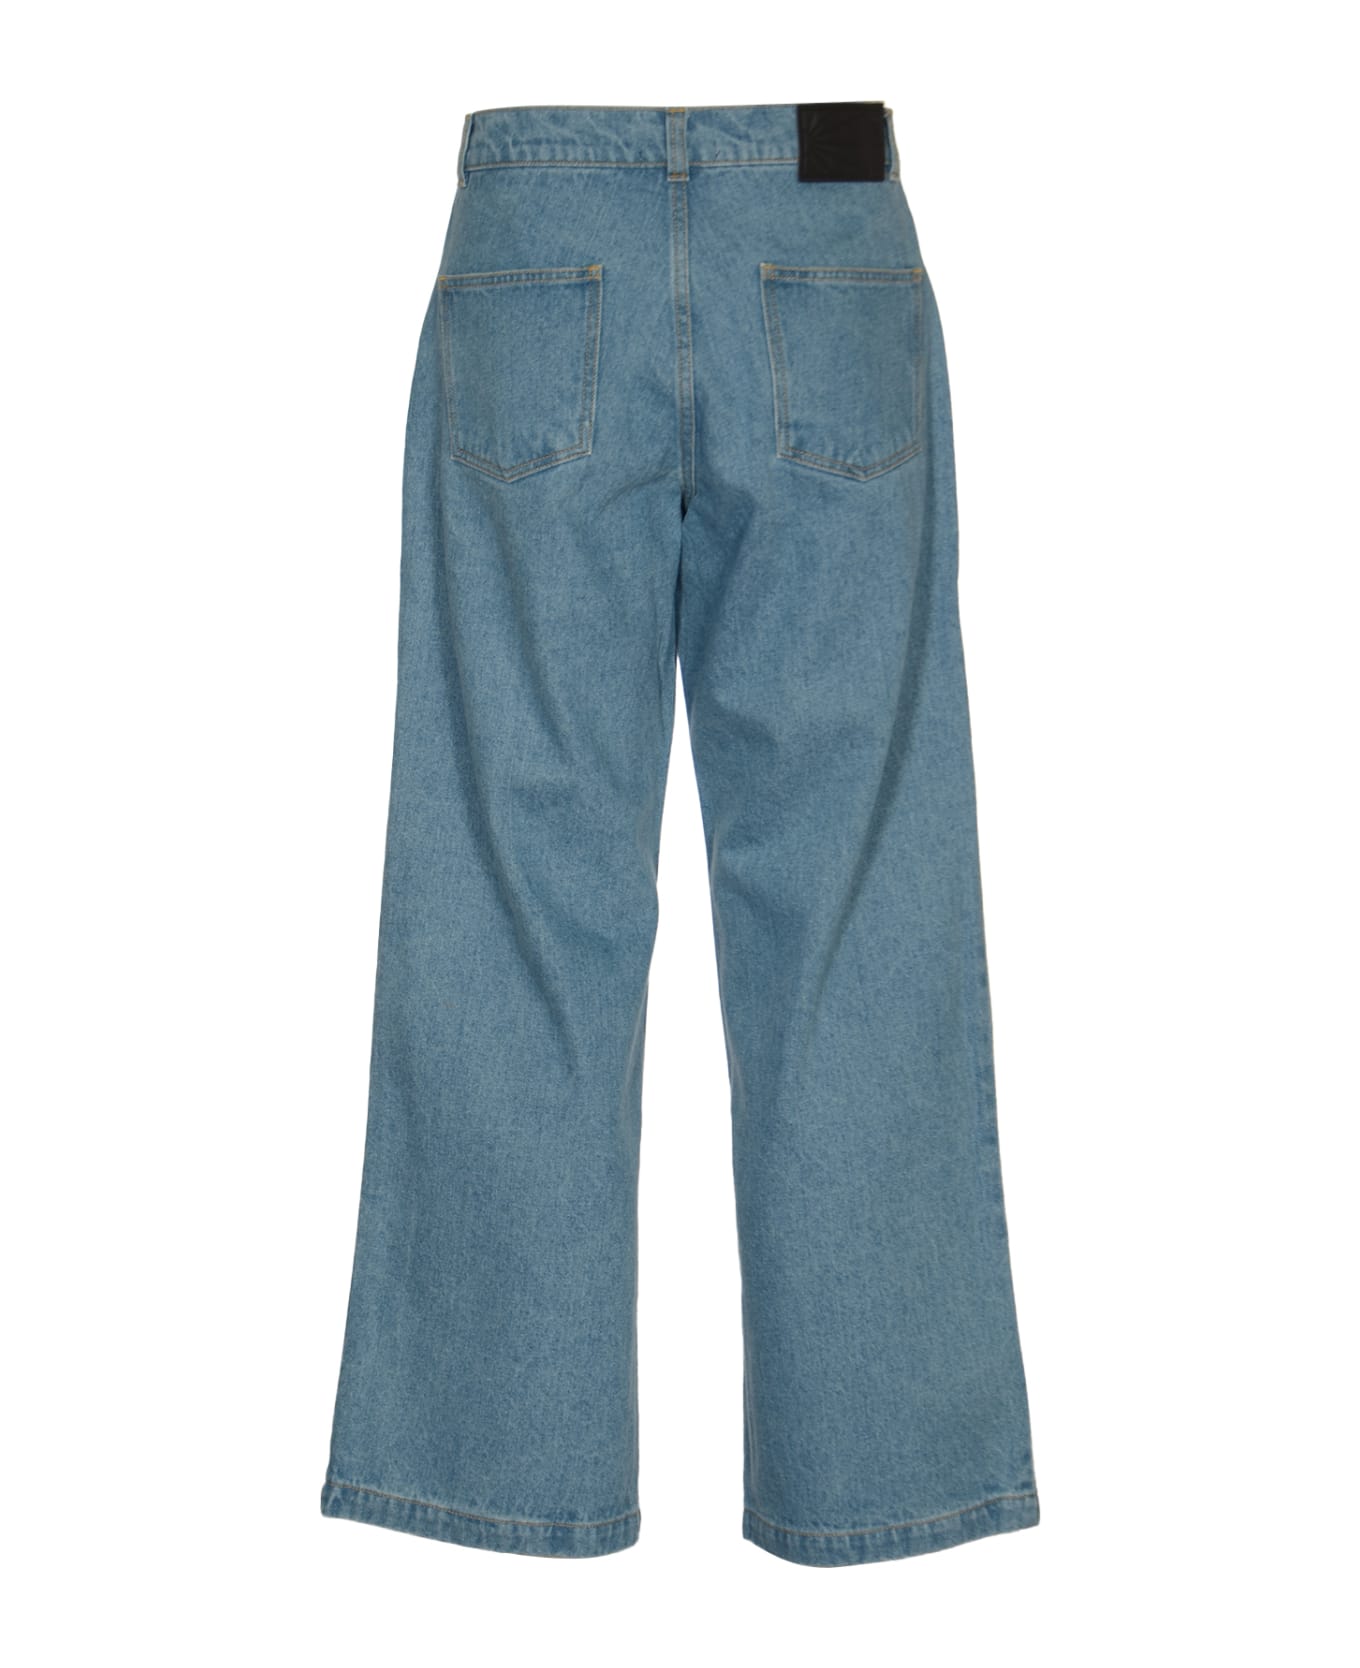 Rassvet Embroidered 5 Pockets Jeans - Light Blue